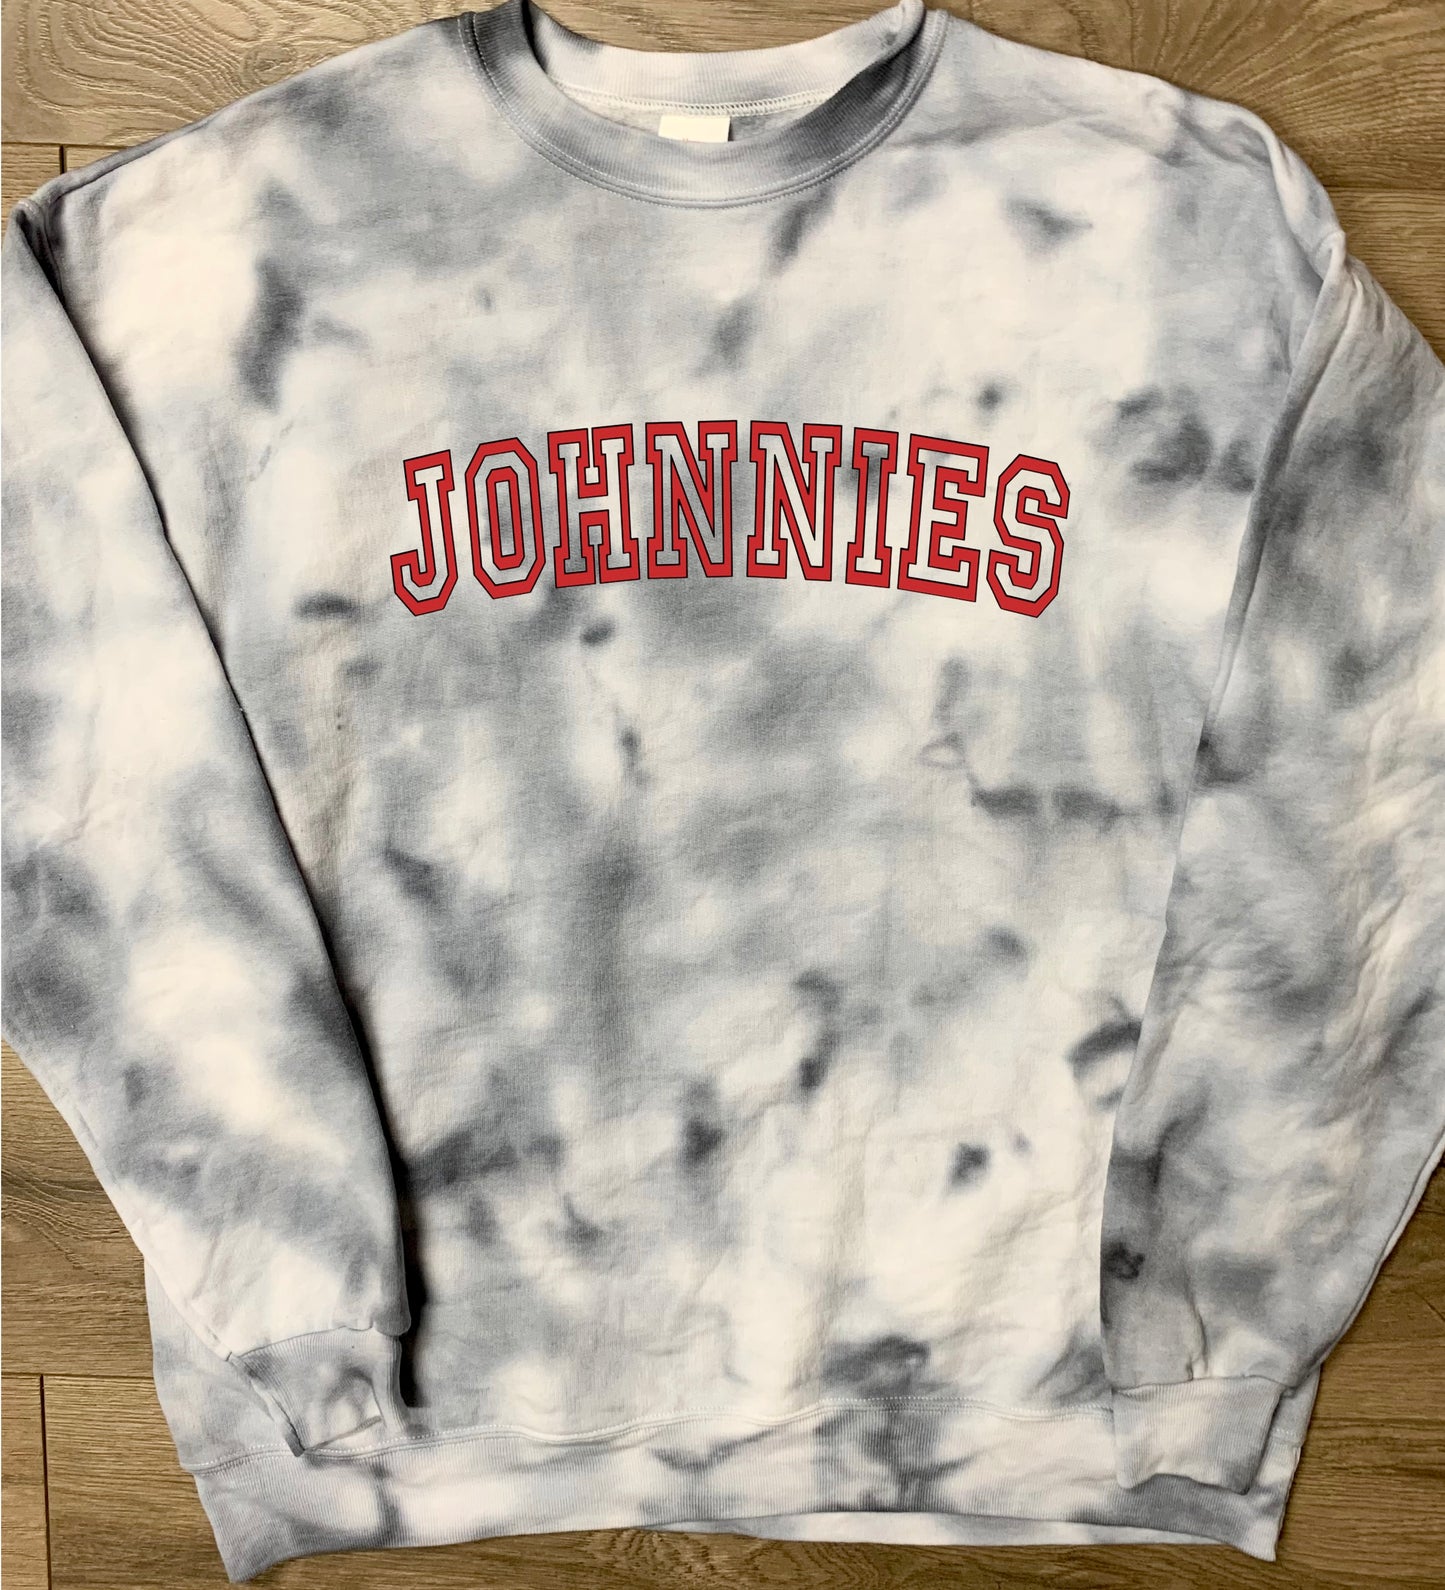 Hand-dyed Adult Johnstown Johnnies Gray Curved Block Johnnies Tie Dye Crewneck Sweatshirt